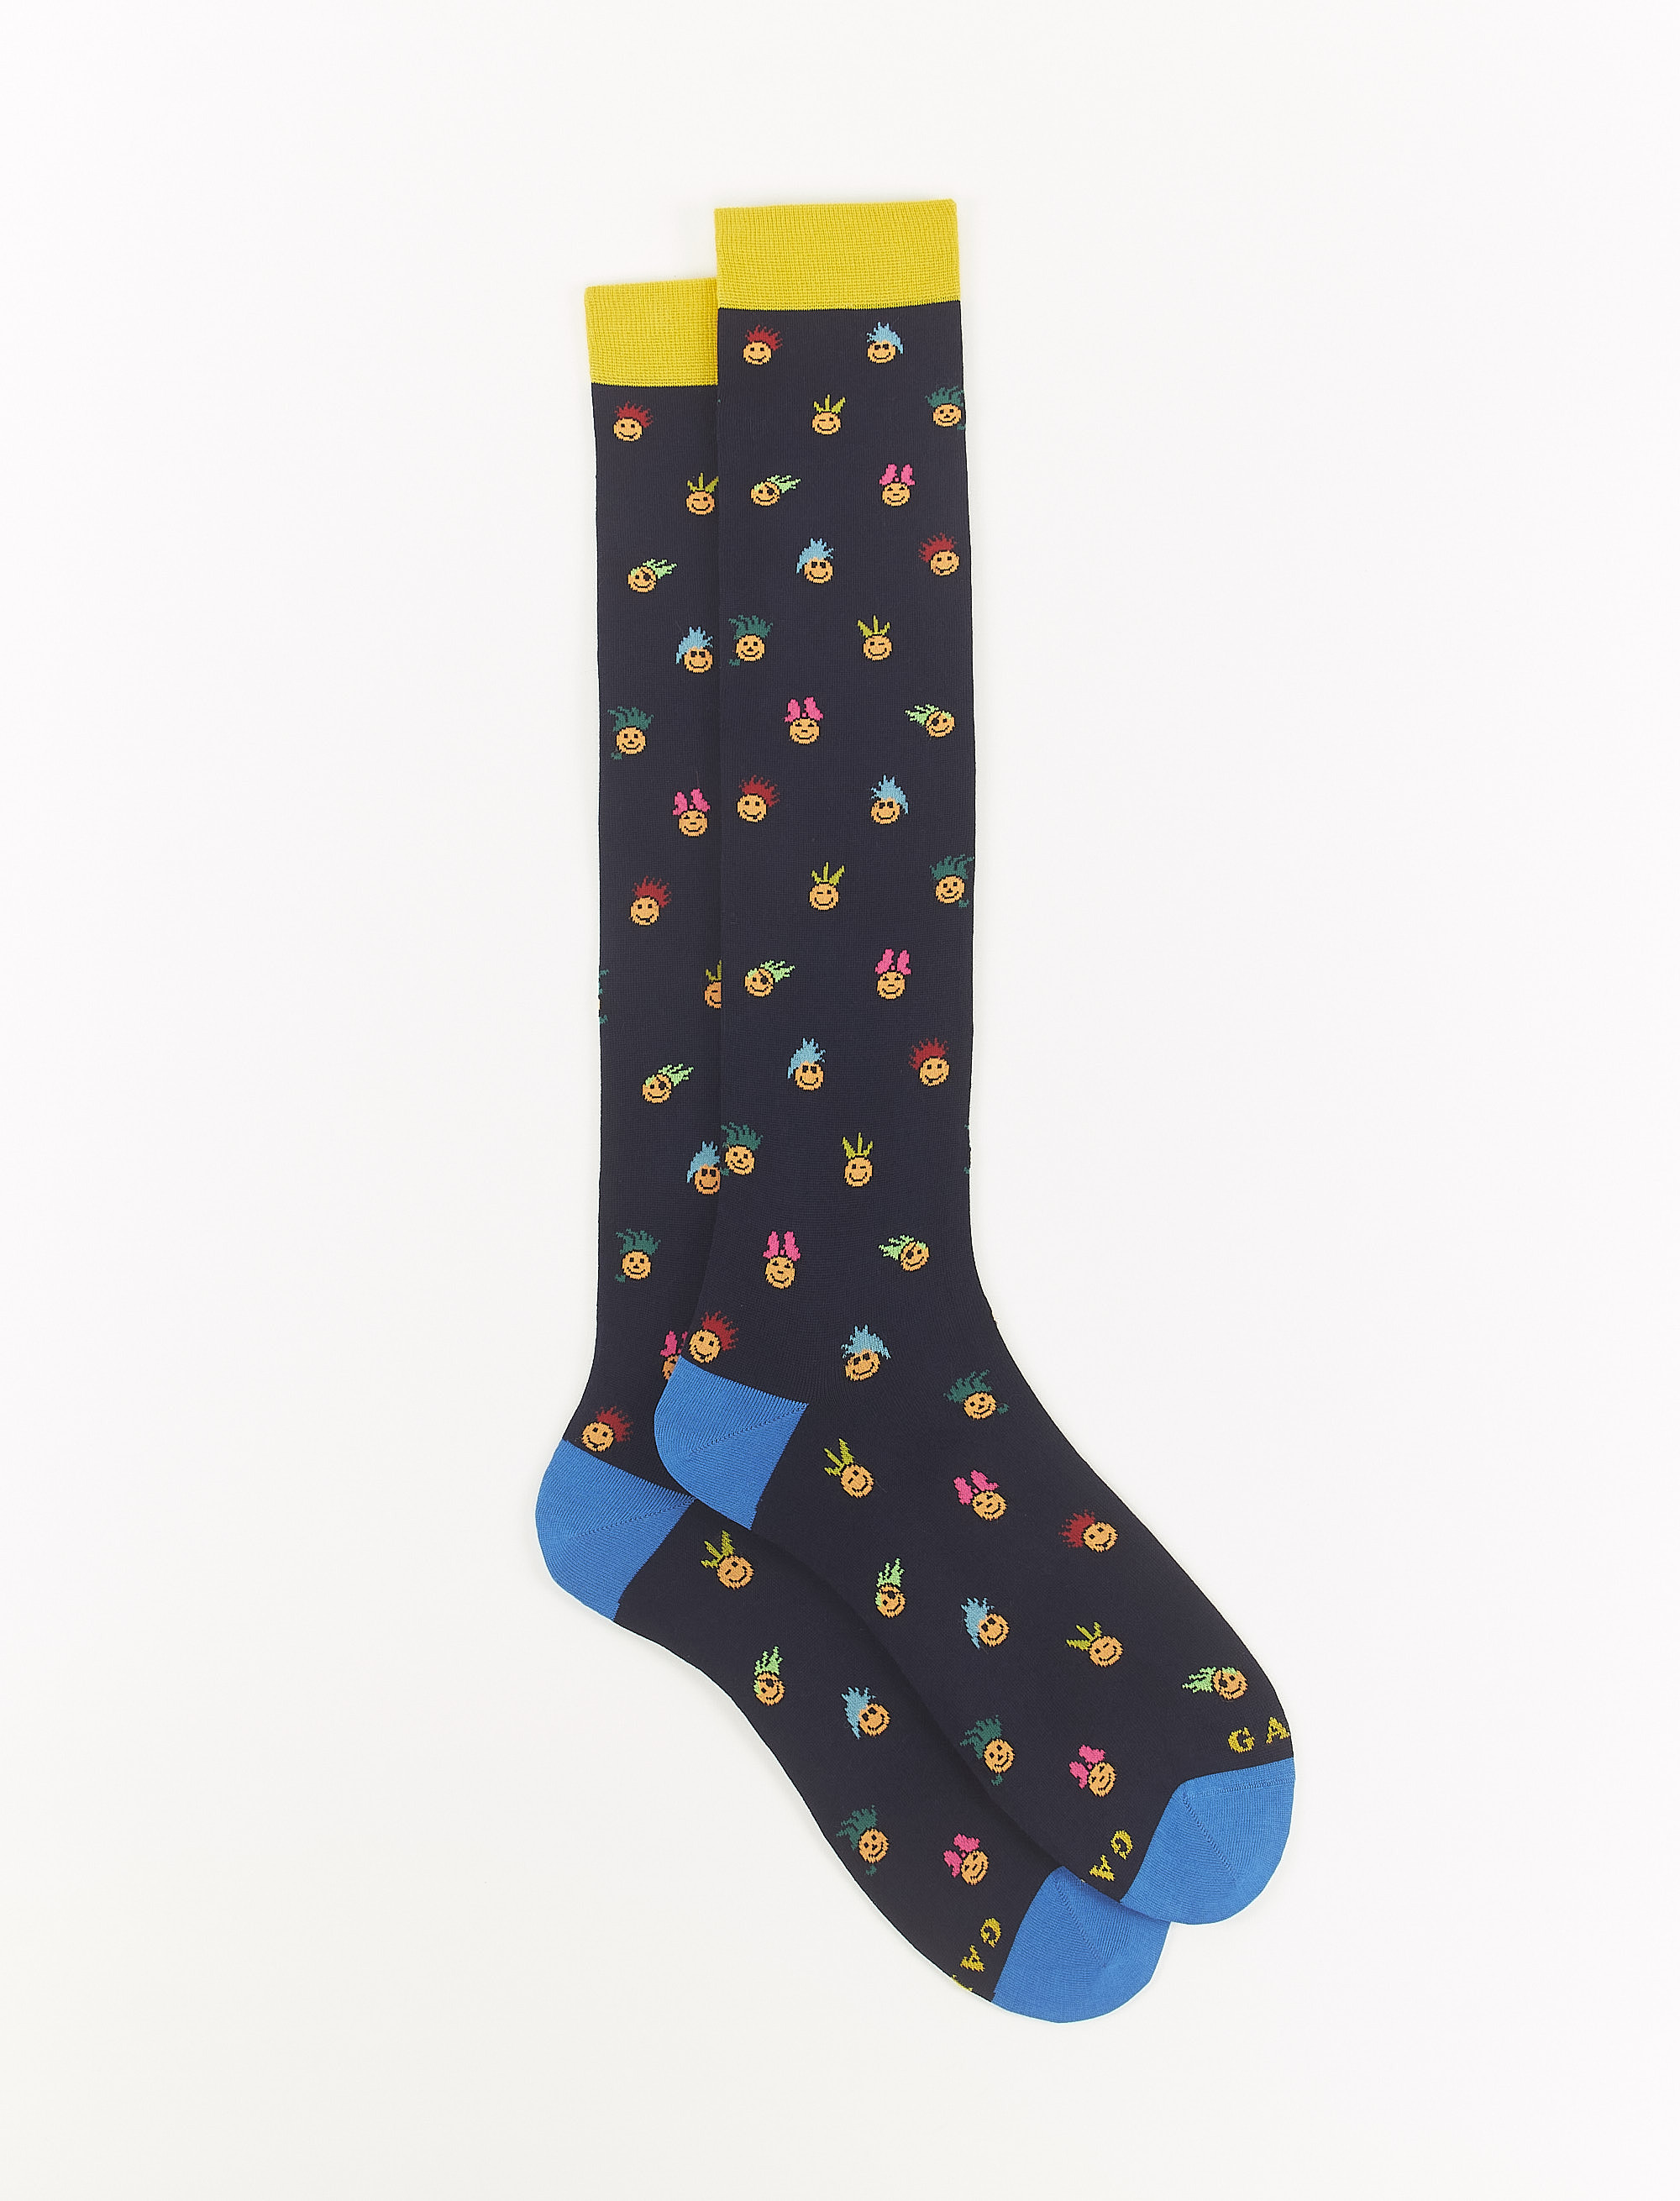 Women's long ocean blue light cotton socks with emoji motif - Woman | Gallo 1927 - Official Online Shop